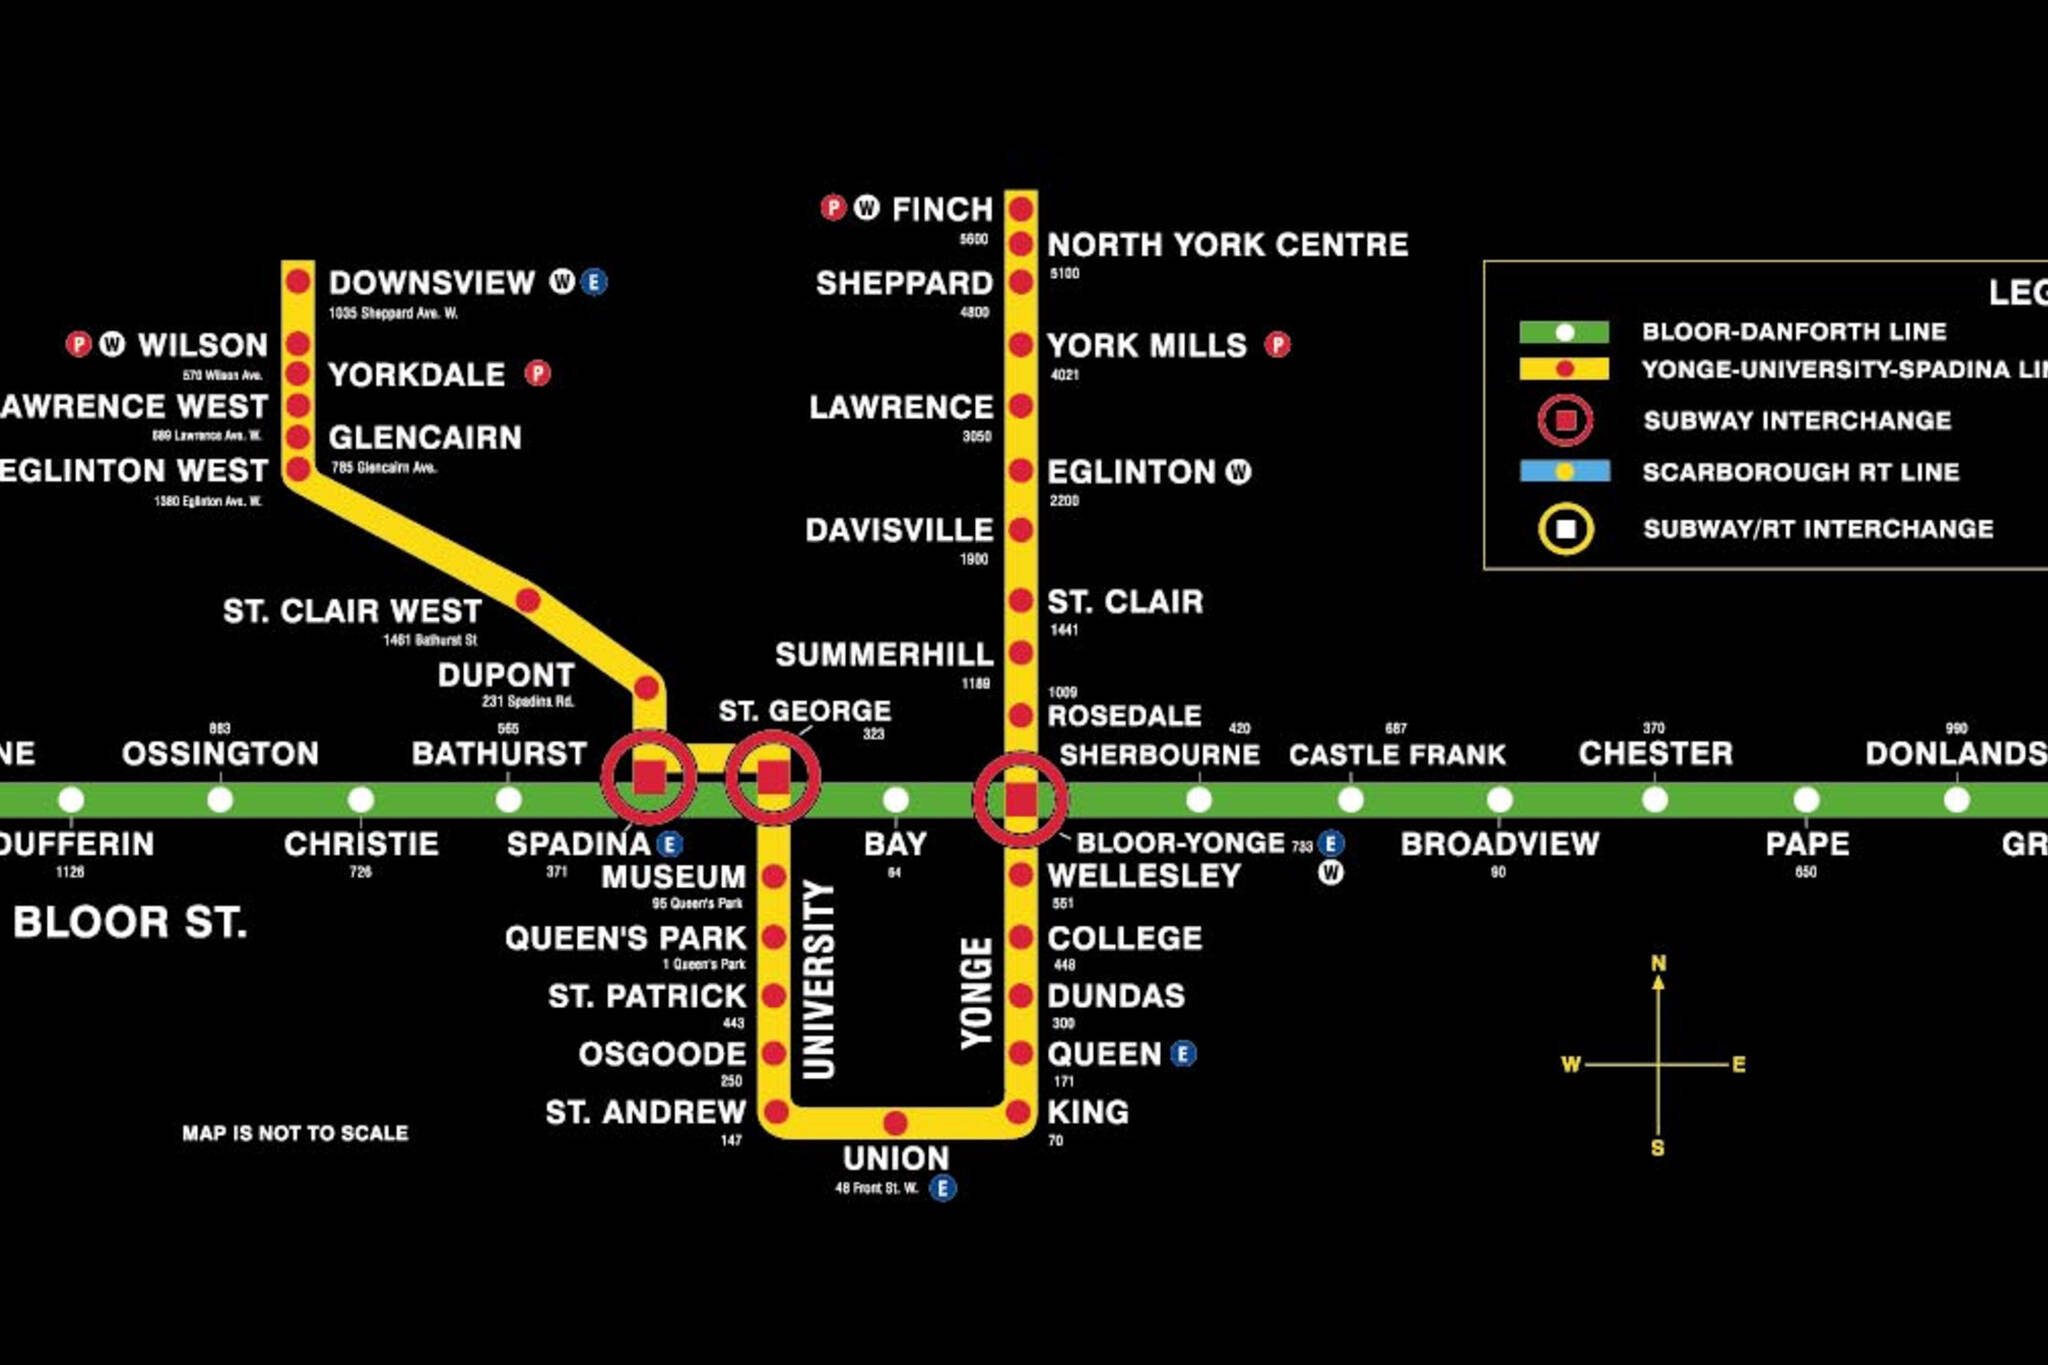 How I See The Ttc Subway Map Subway Map Toronto Subwa - vrogue.co